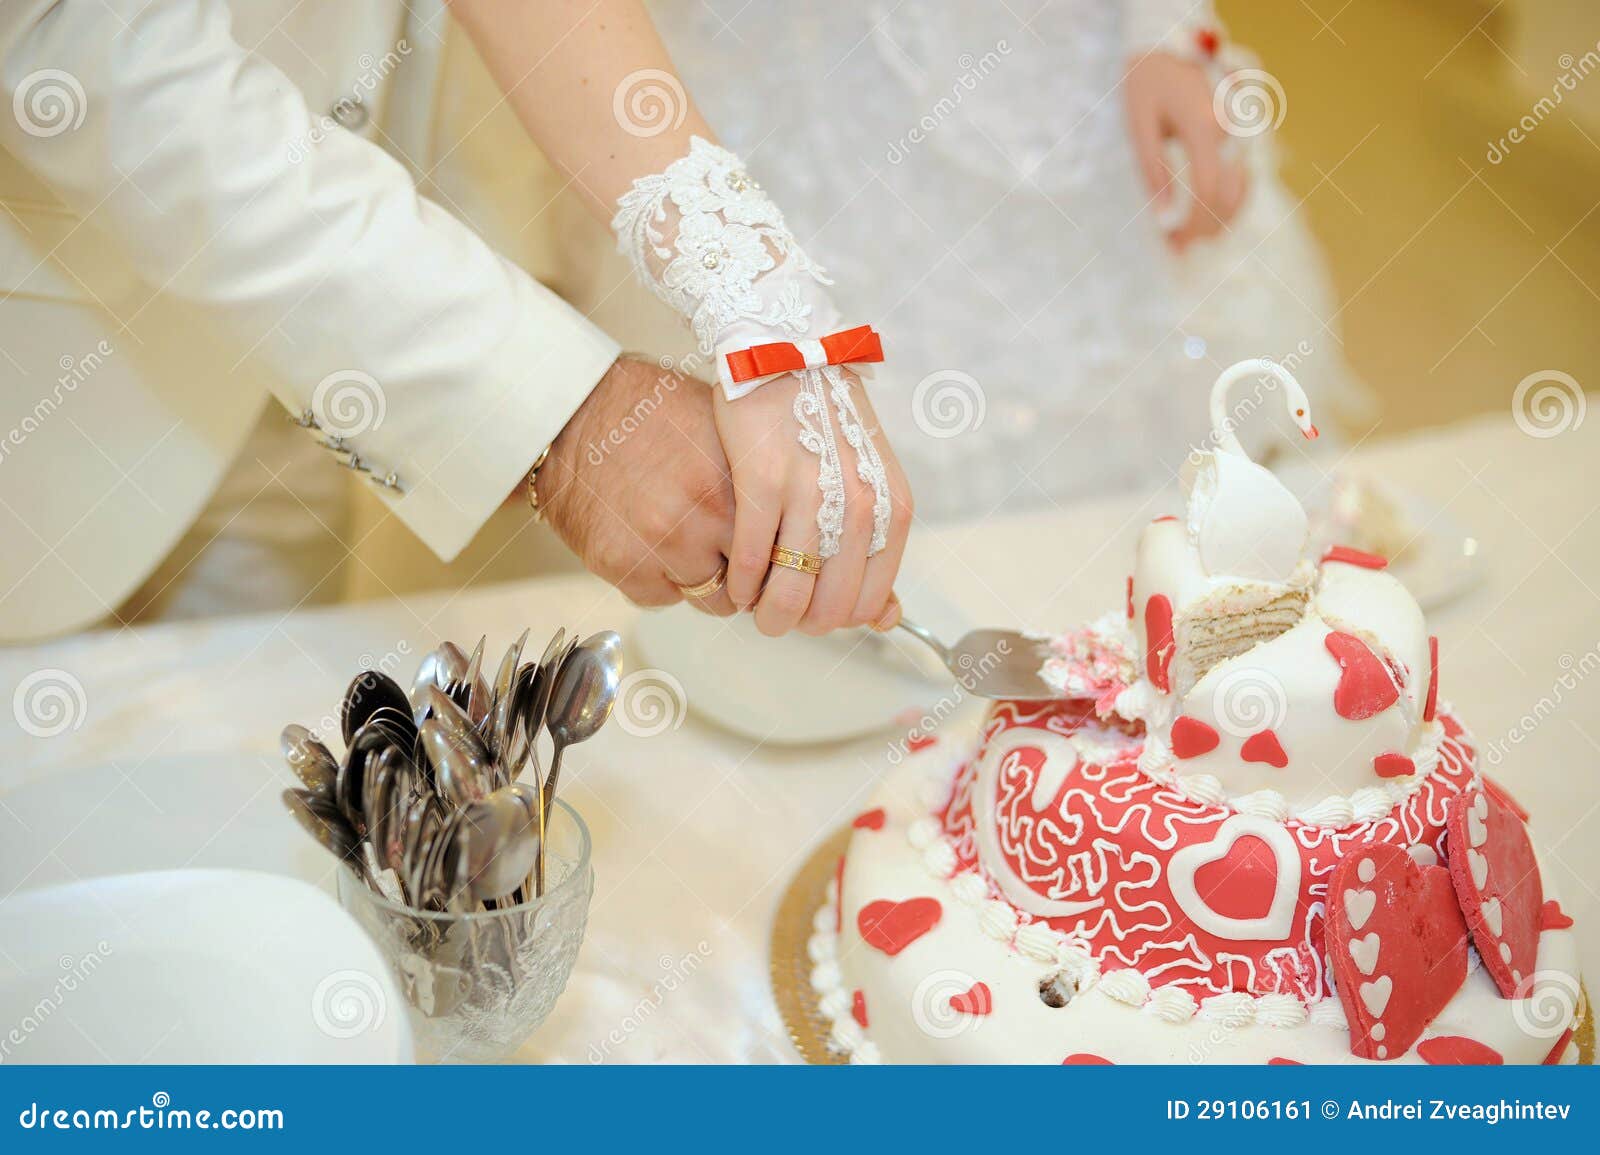 Wedding Cake with Swan. Couple cutting beautiful wedding cake